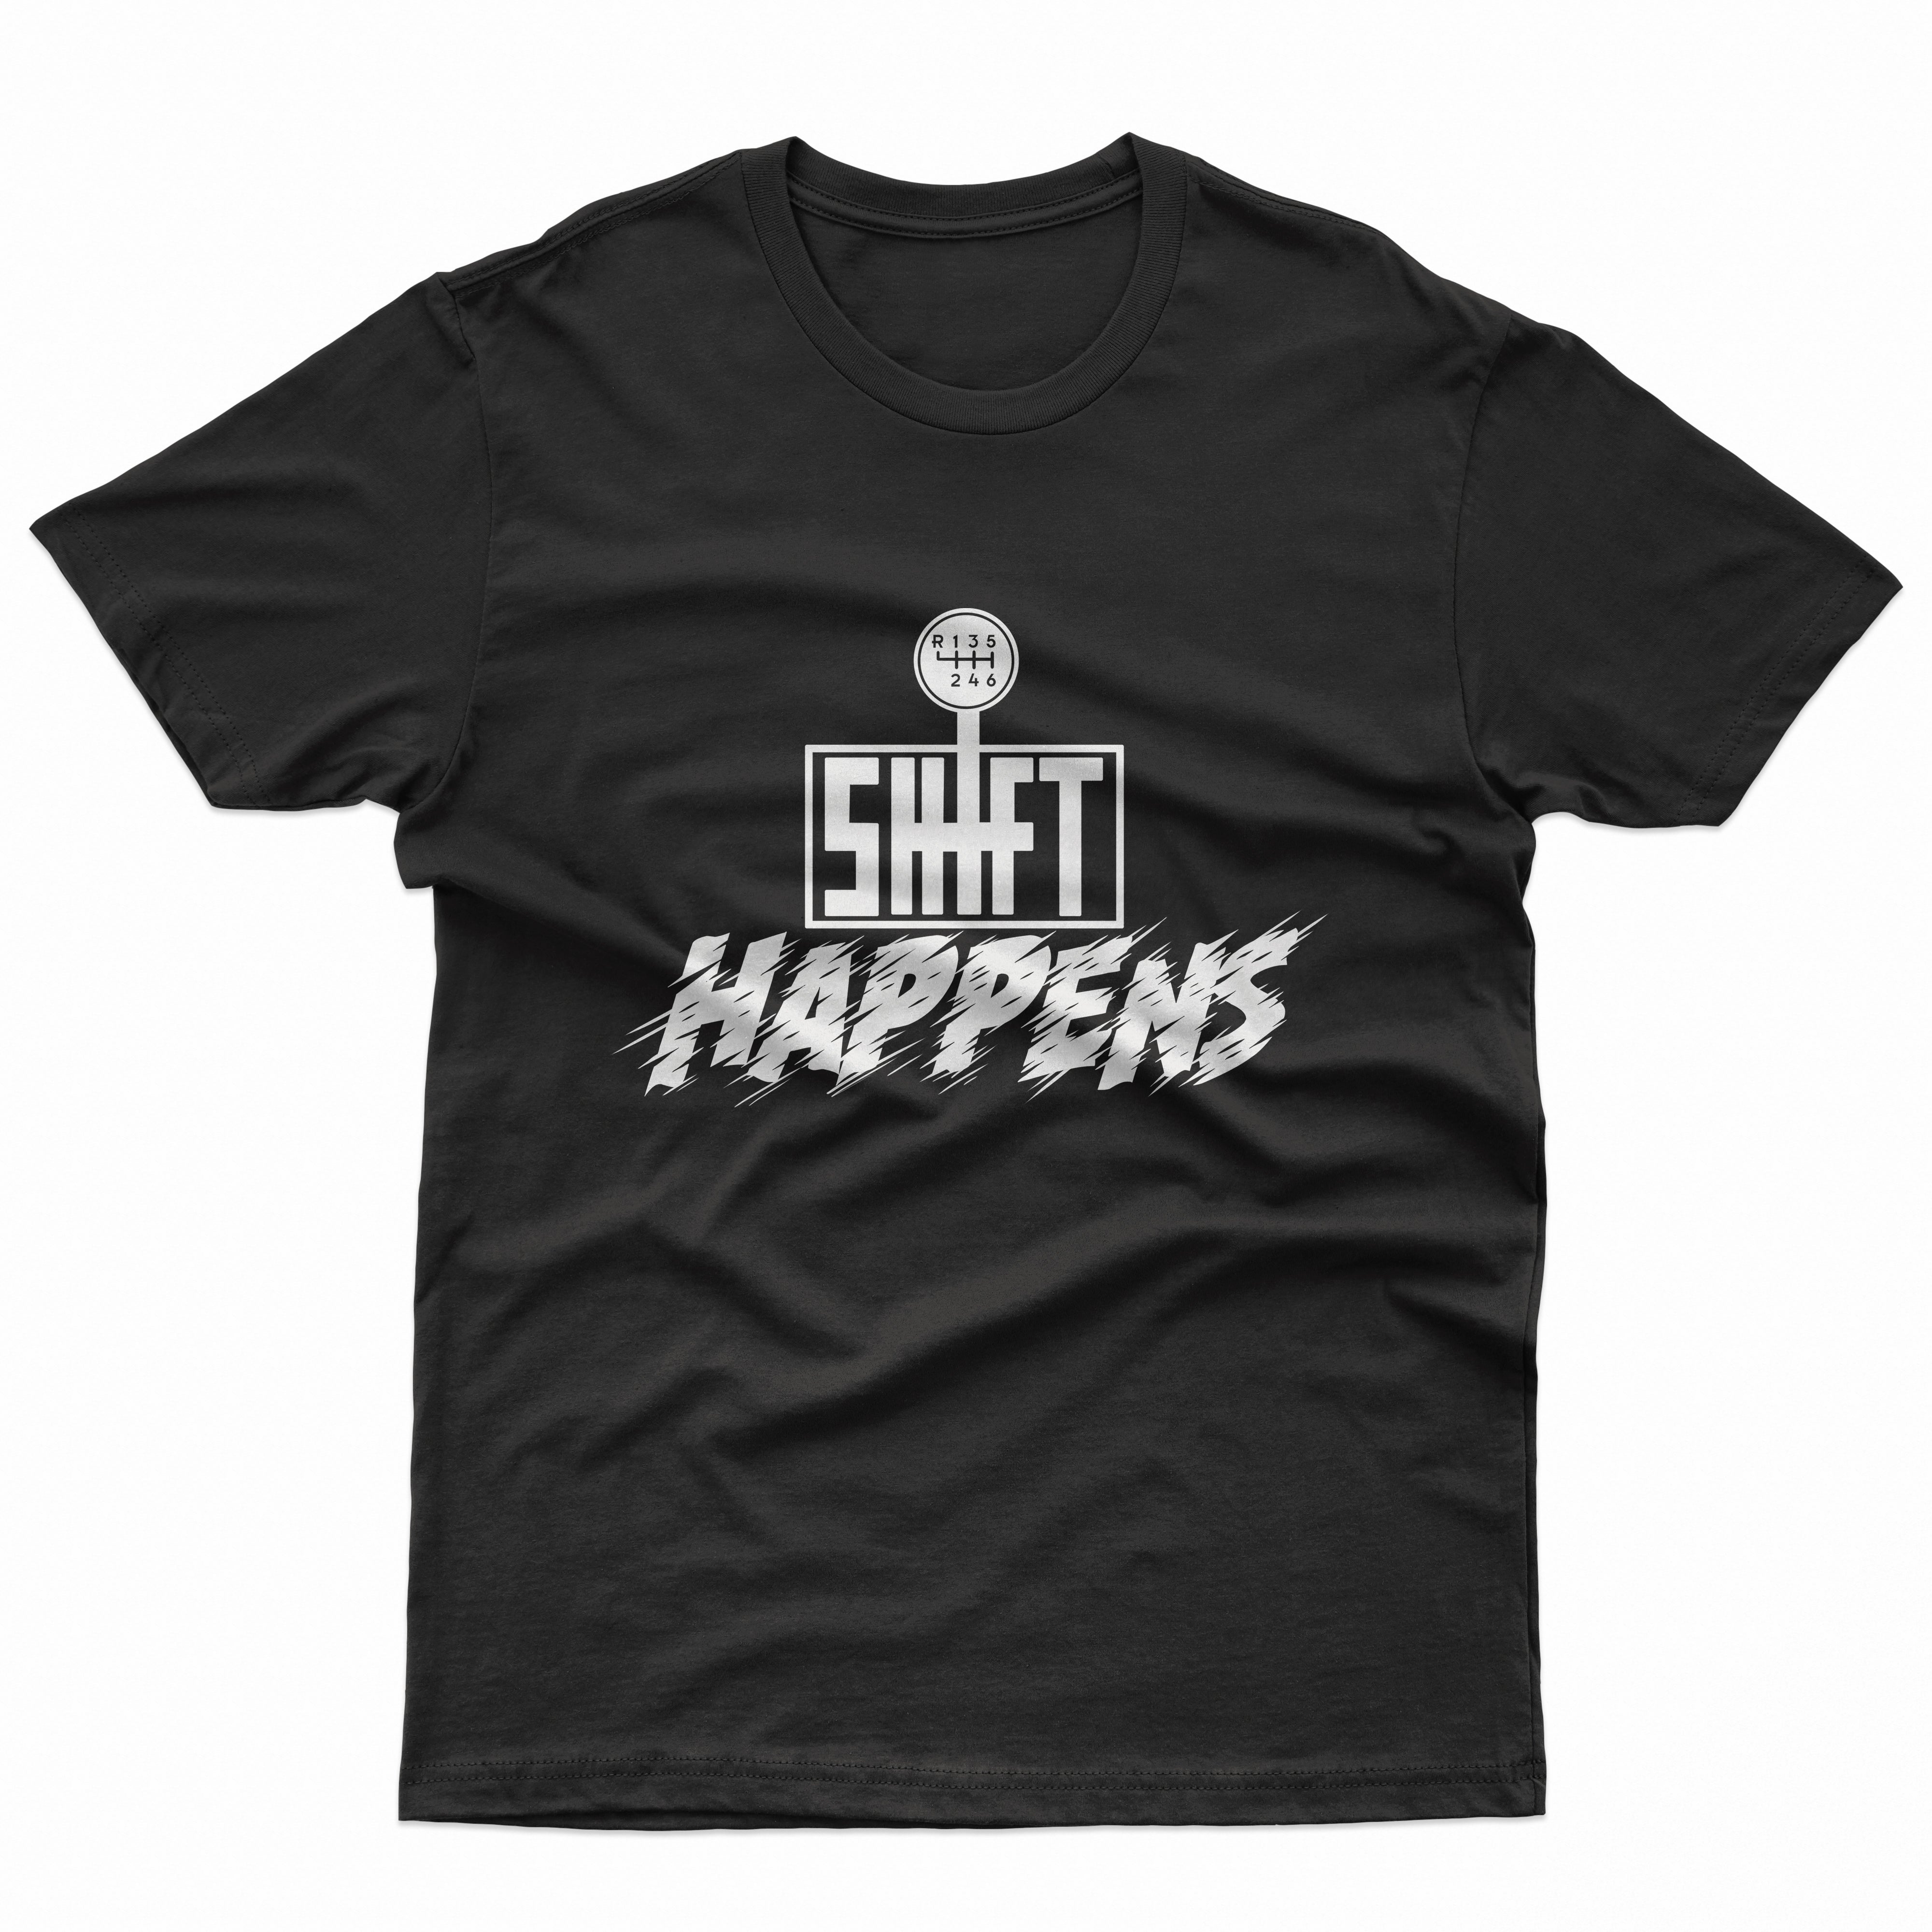 Shift Happens Kids T Shirt